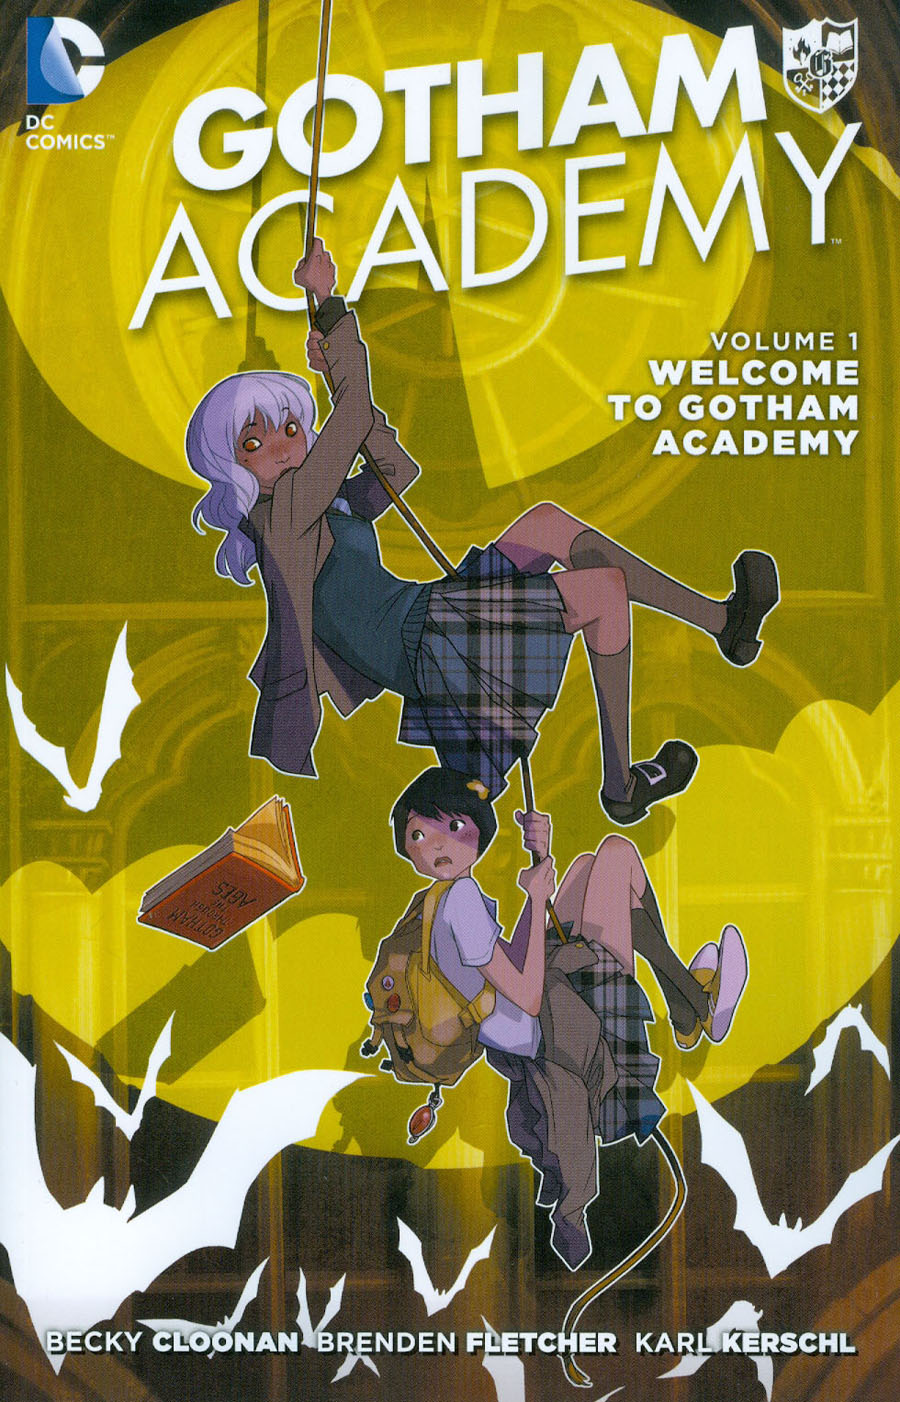 Gotham Academy (New 52) Vol 1 Welcome To Gotham Academy TP